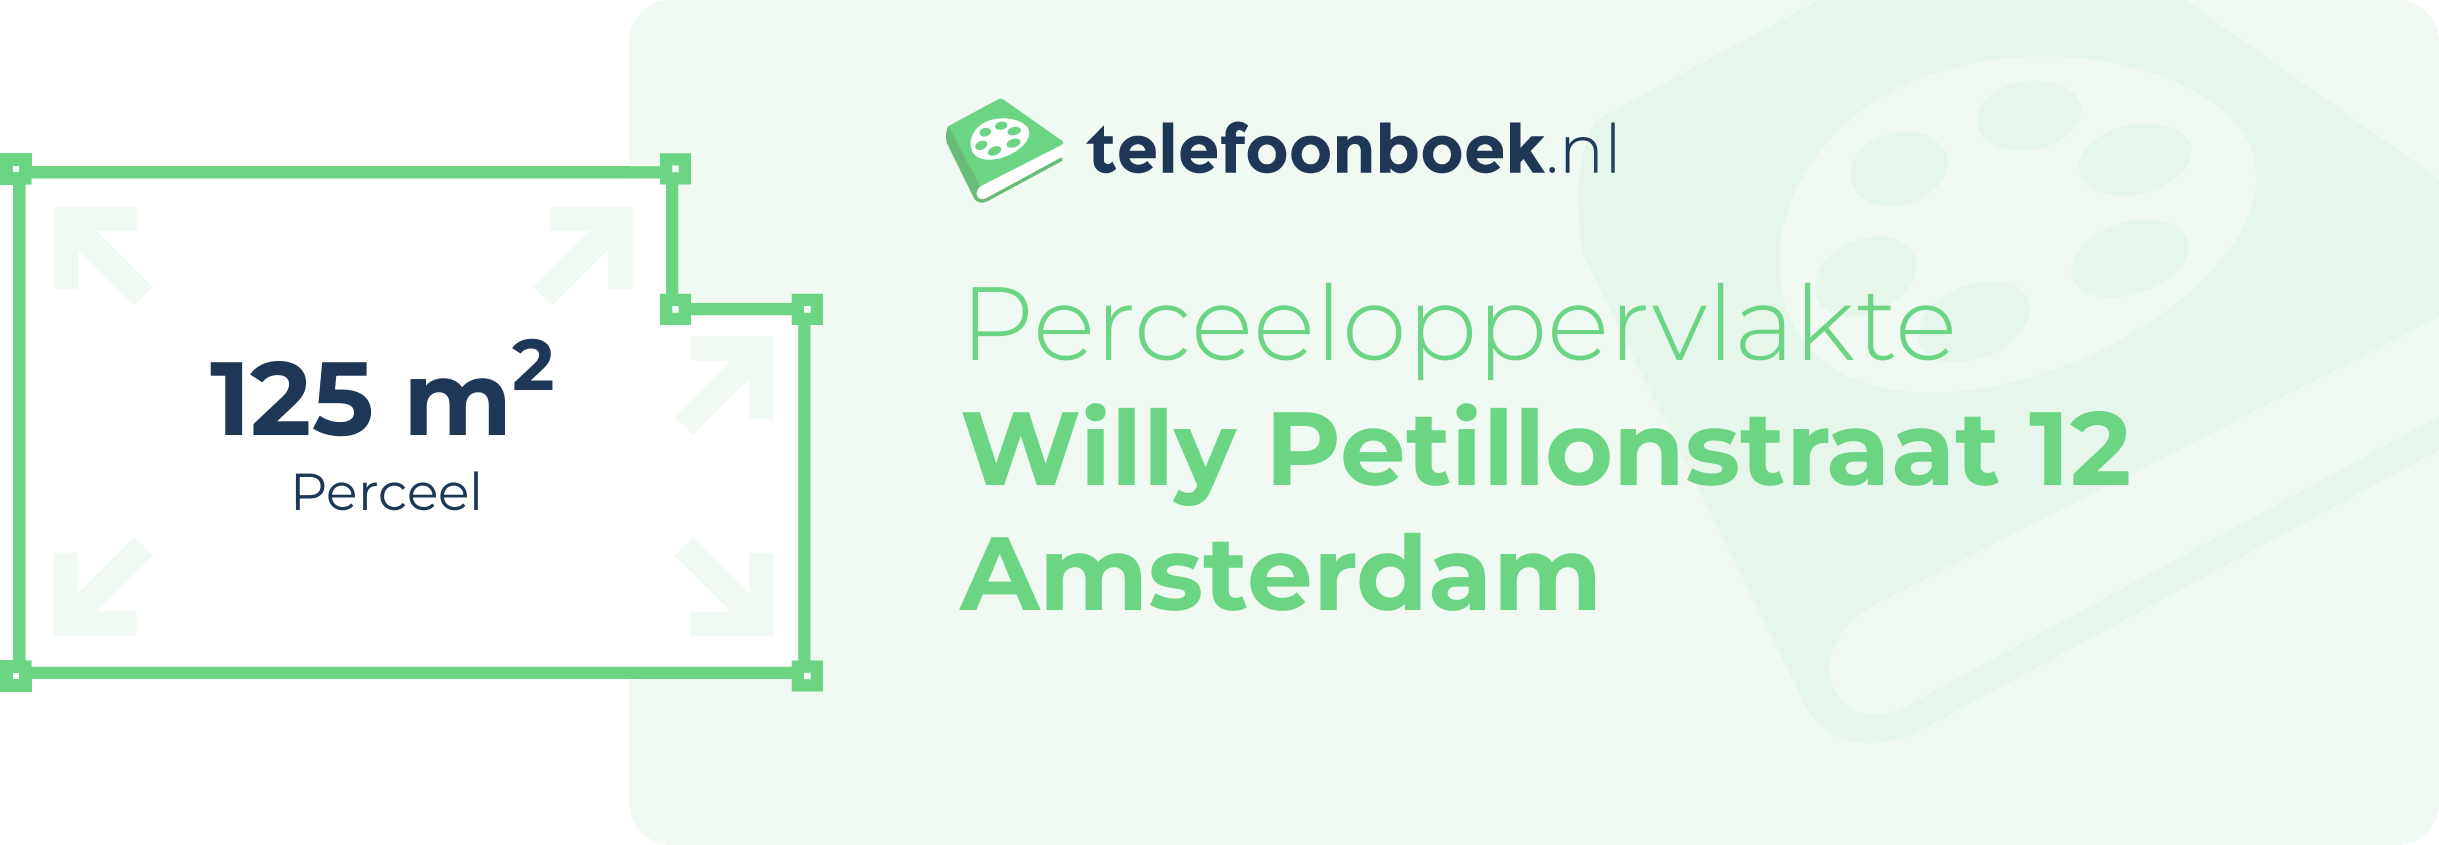 Perceeloppervlakte Willy Petillonstraat 12 Amsterdam